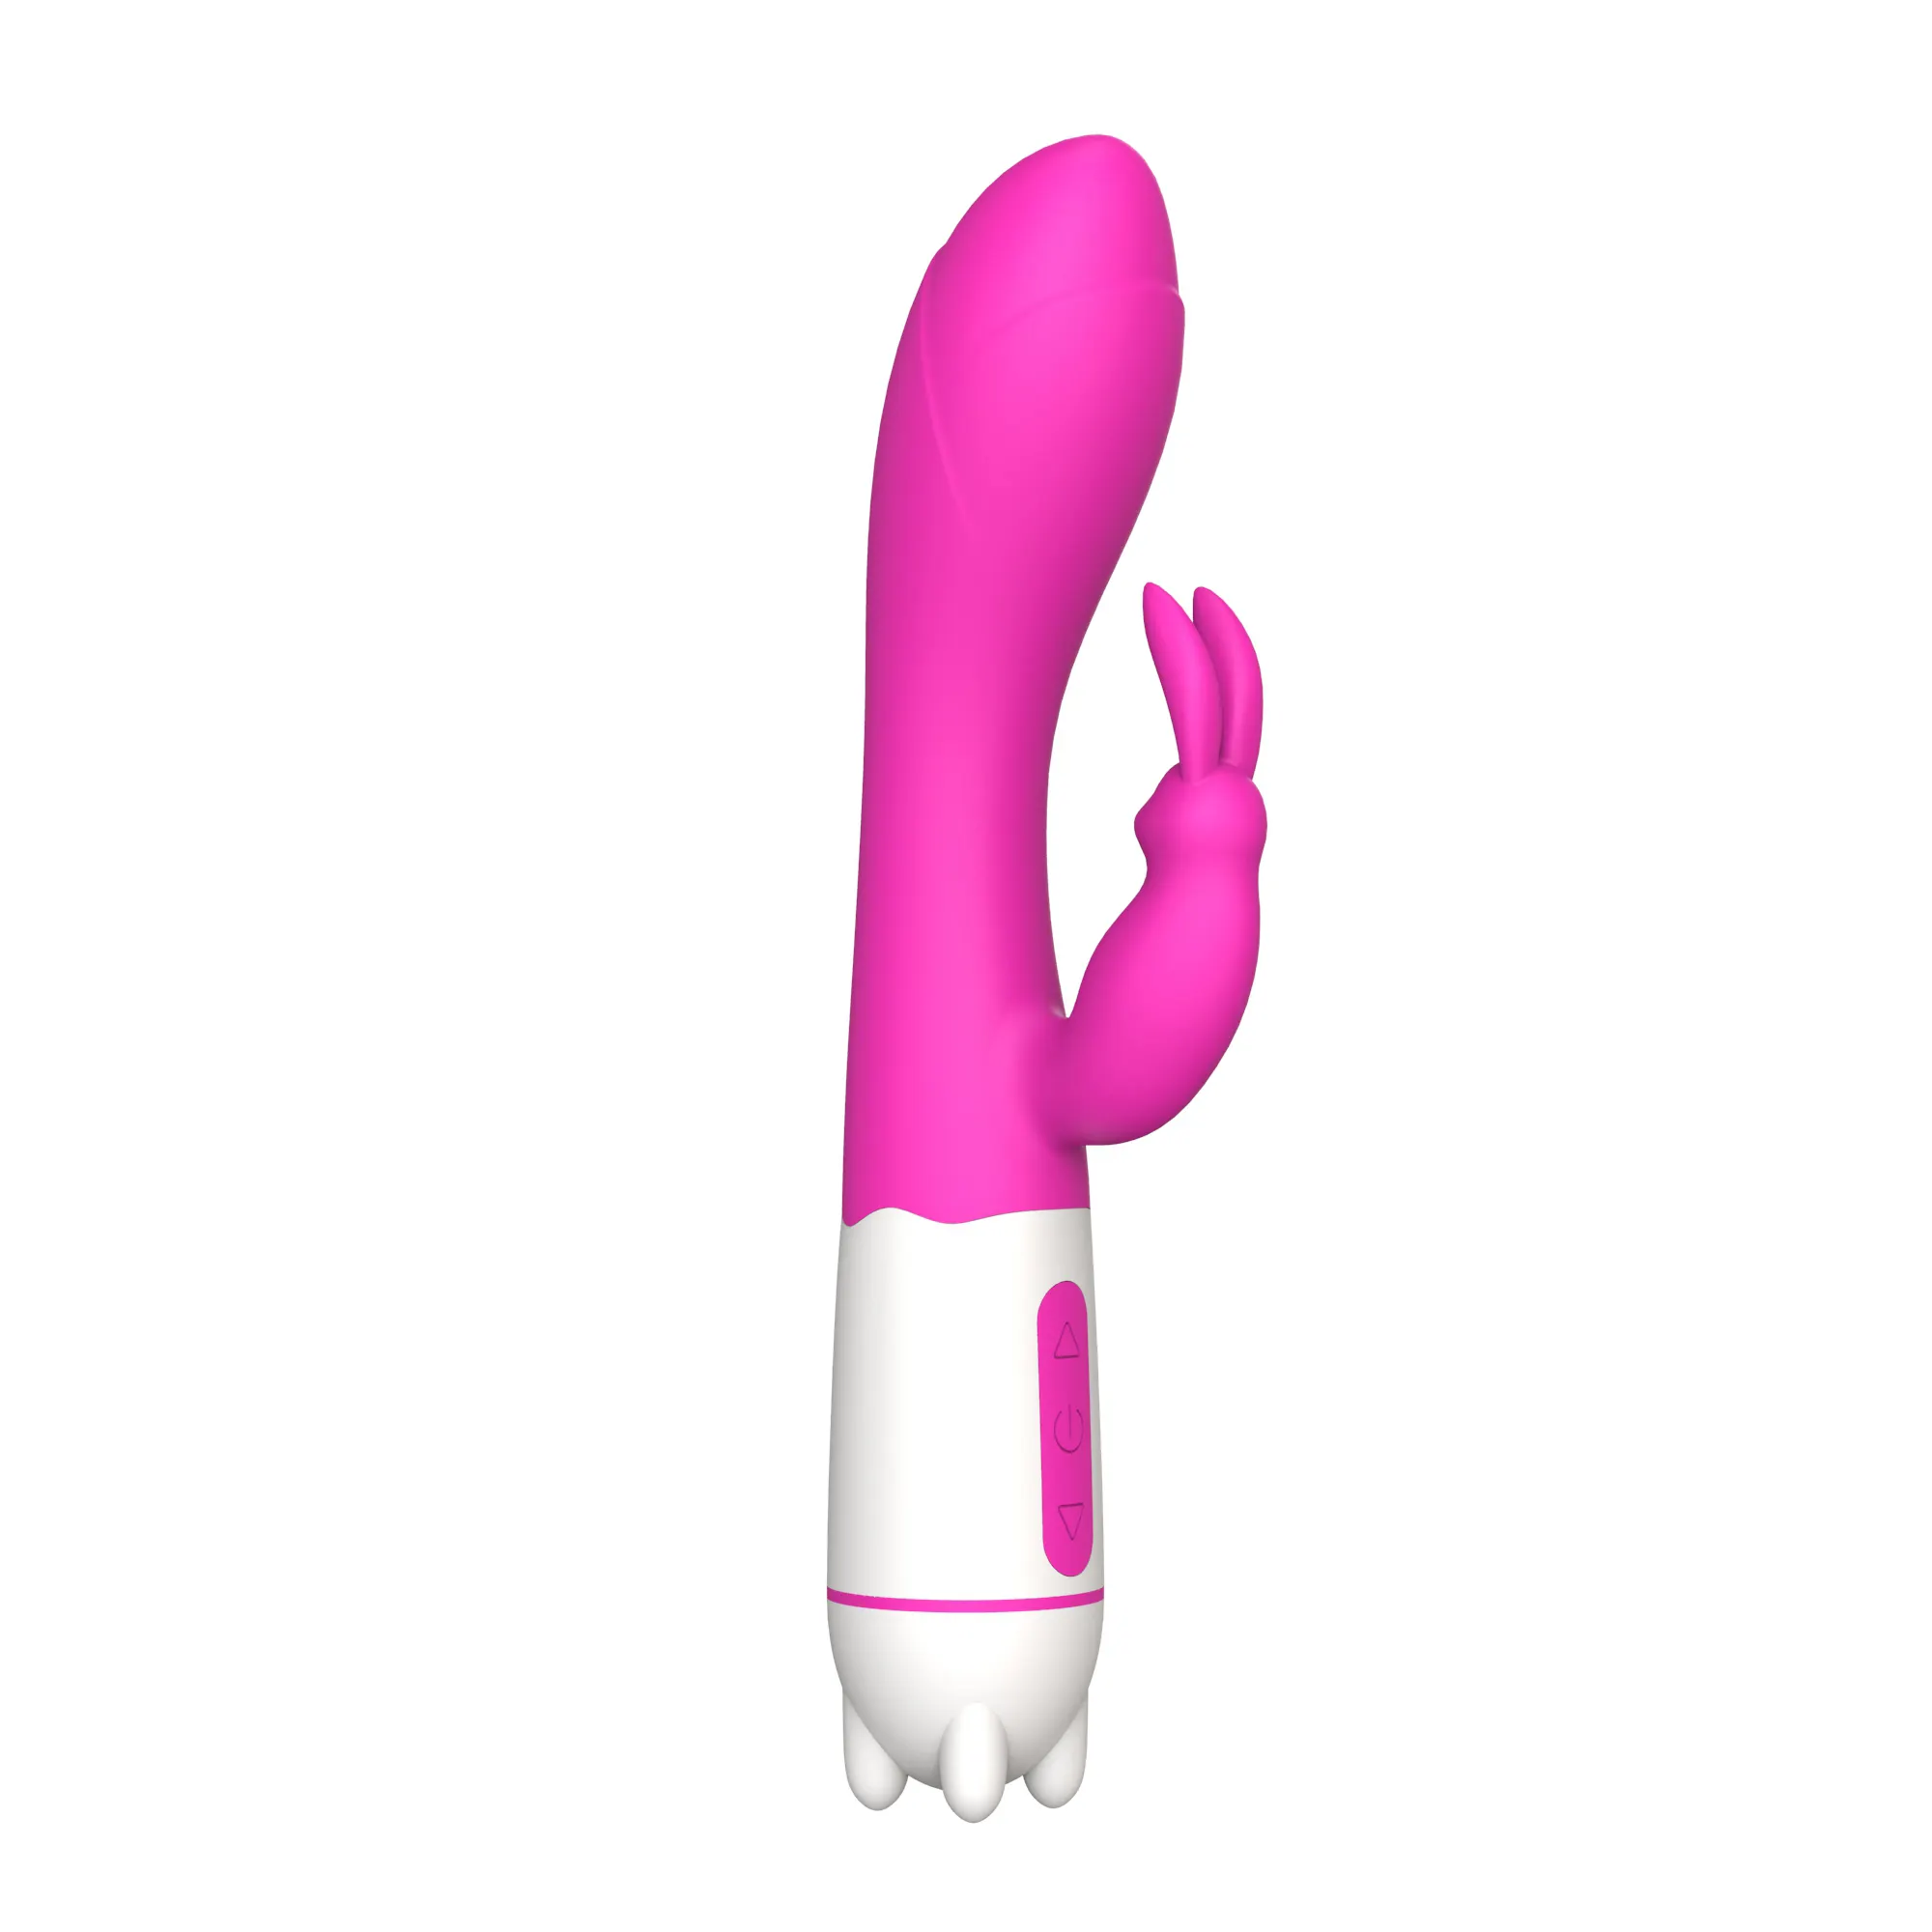 NEU Rabbit Vibrator 36-Gang Vibrations dildo für Frauen USB Charge Weiblicher Mastur bator Dual Motor G-Punkt Klitoris Massage Sexspielzeug